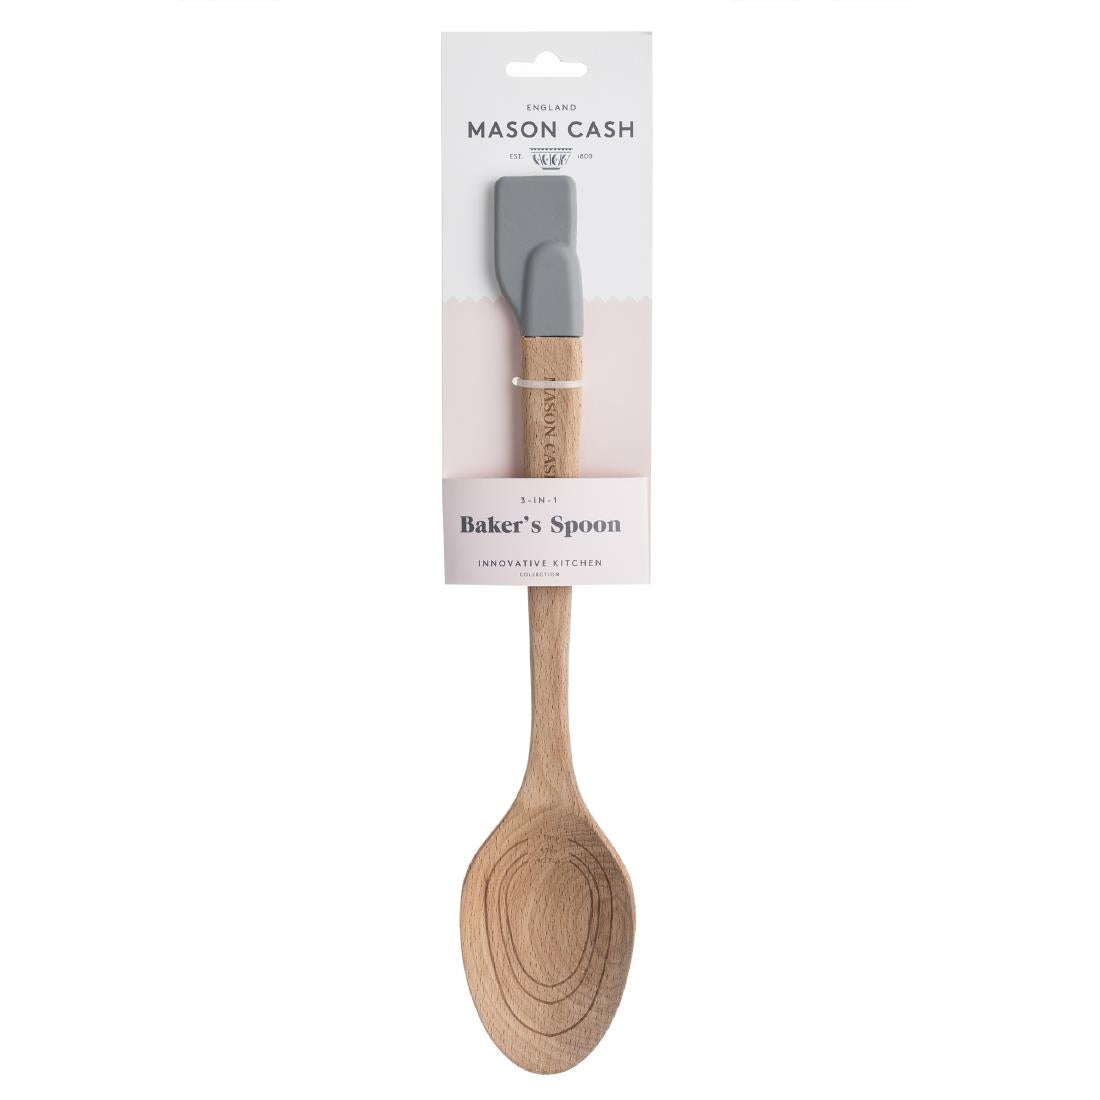 DX955 Mason Cash Innovative Kitchen Solid Spoon & Jar Scraper